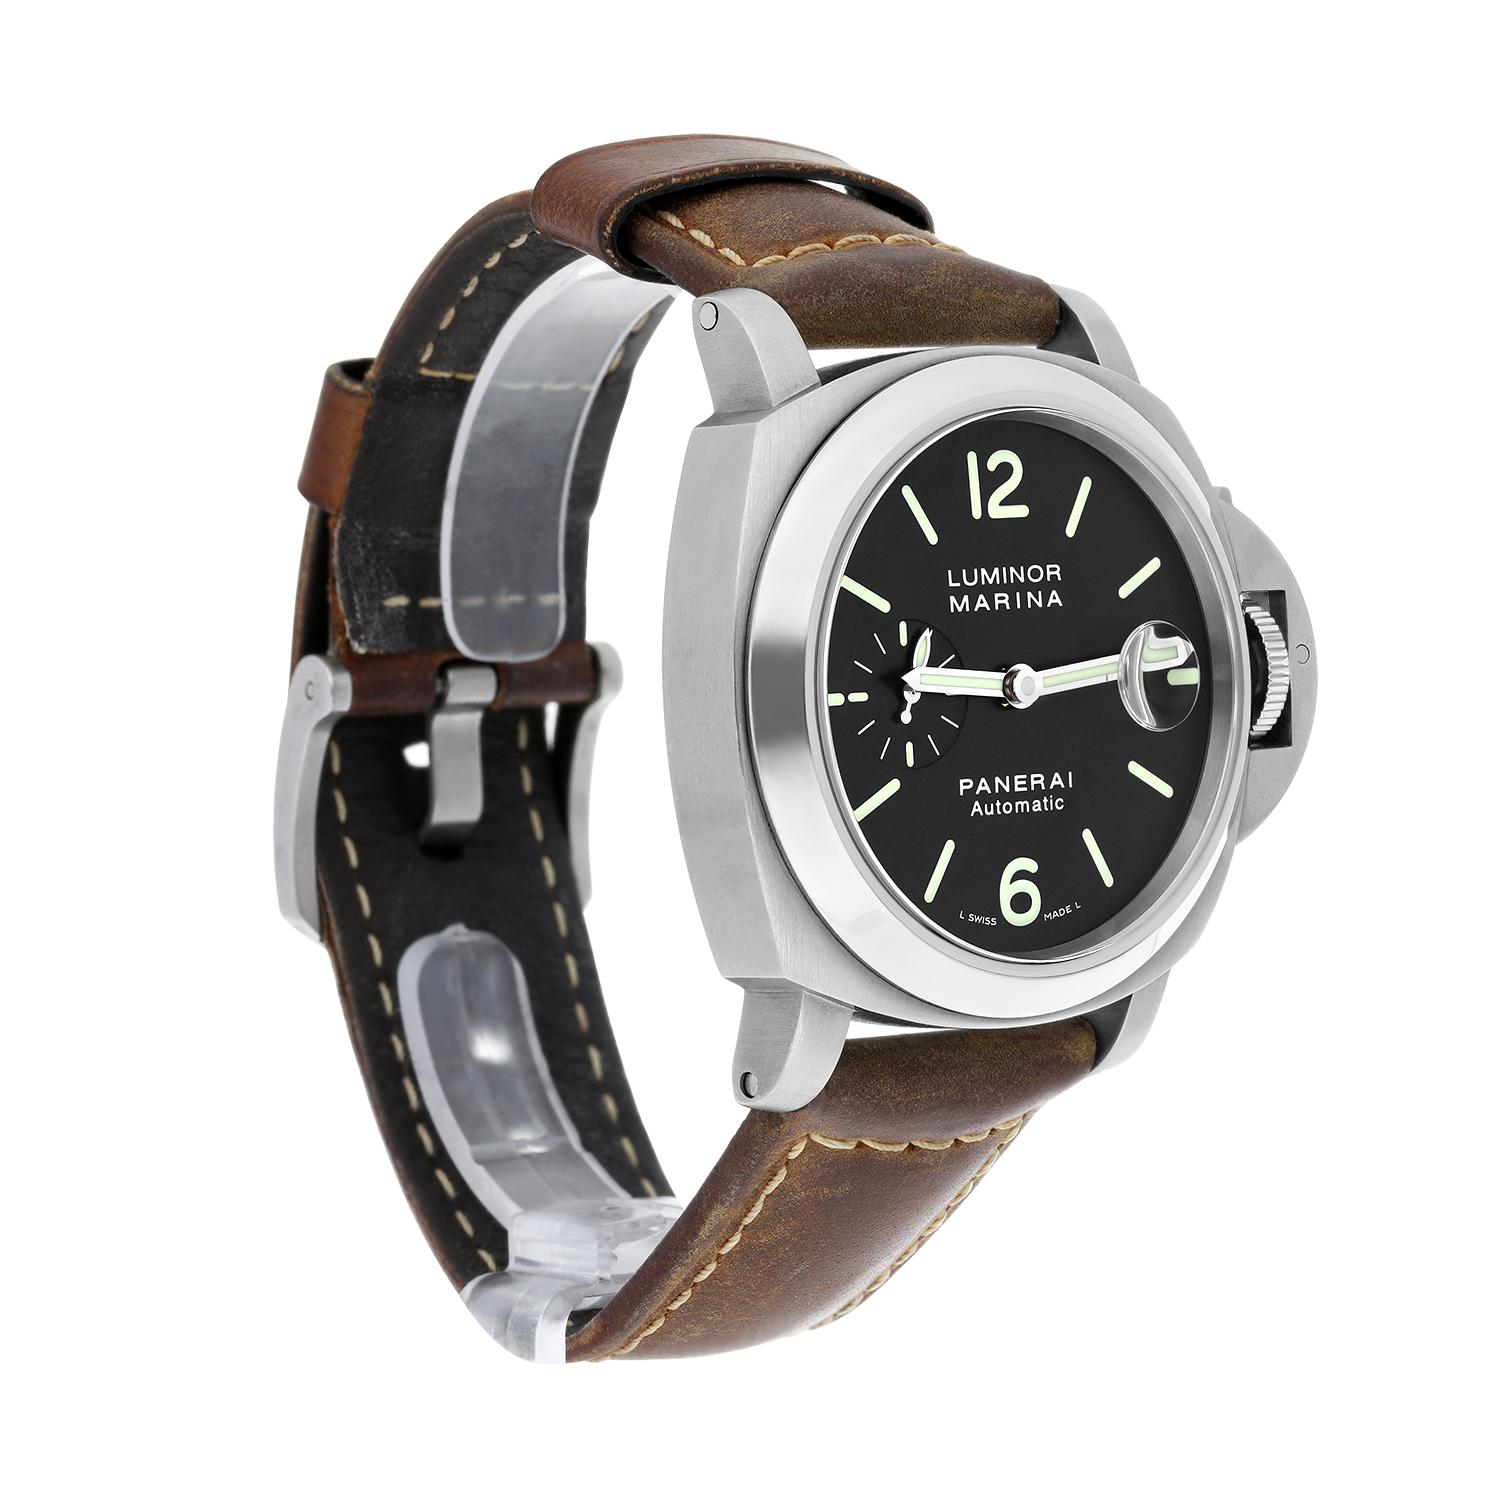 Panerai Luminor Marina PAM00104 Small Second Date Automatic Men's Watch For Sale 2